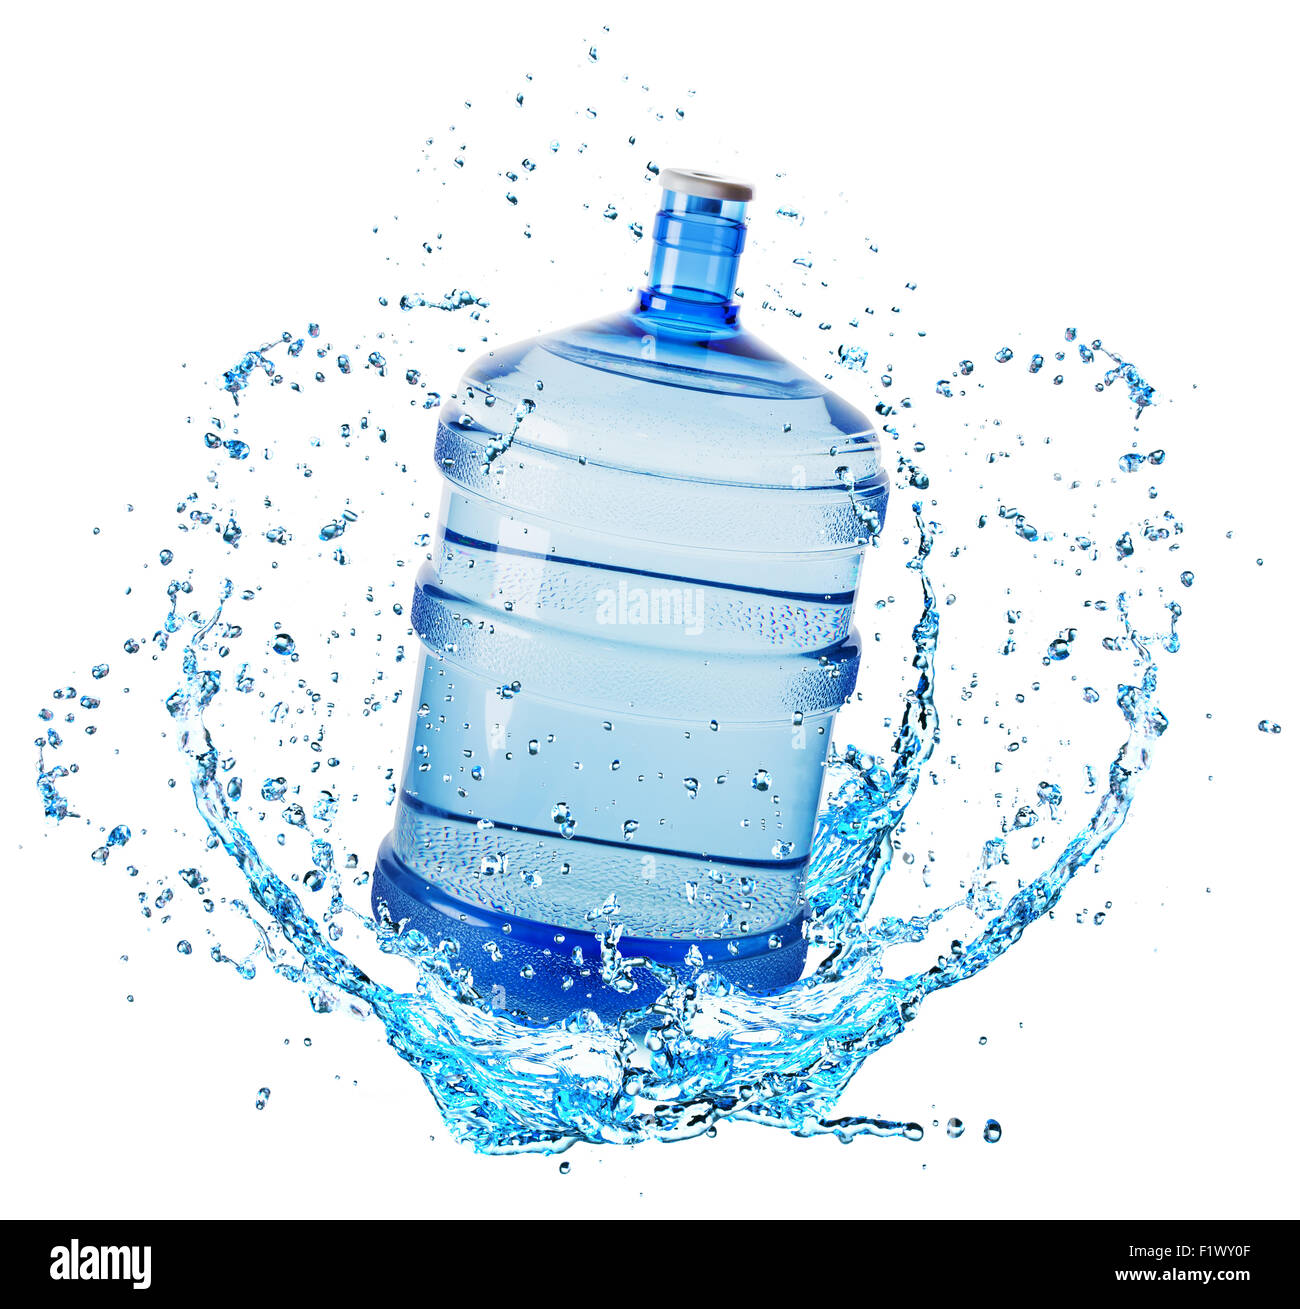 https://c8.alamy.com/compes/f1wy0f/una-botella-de-agua-grande-en-agua-splash-aislado-sobre-fondo-blanco-f1wy0f.jpg